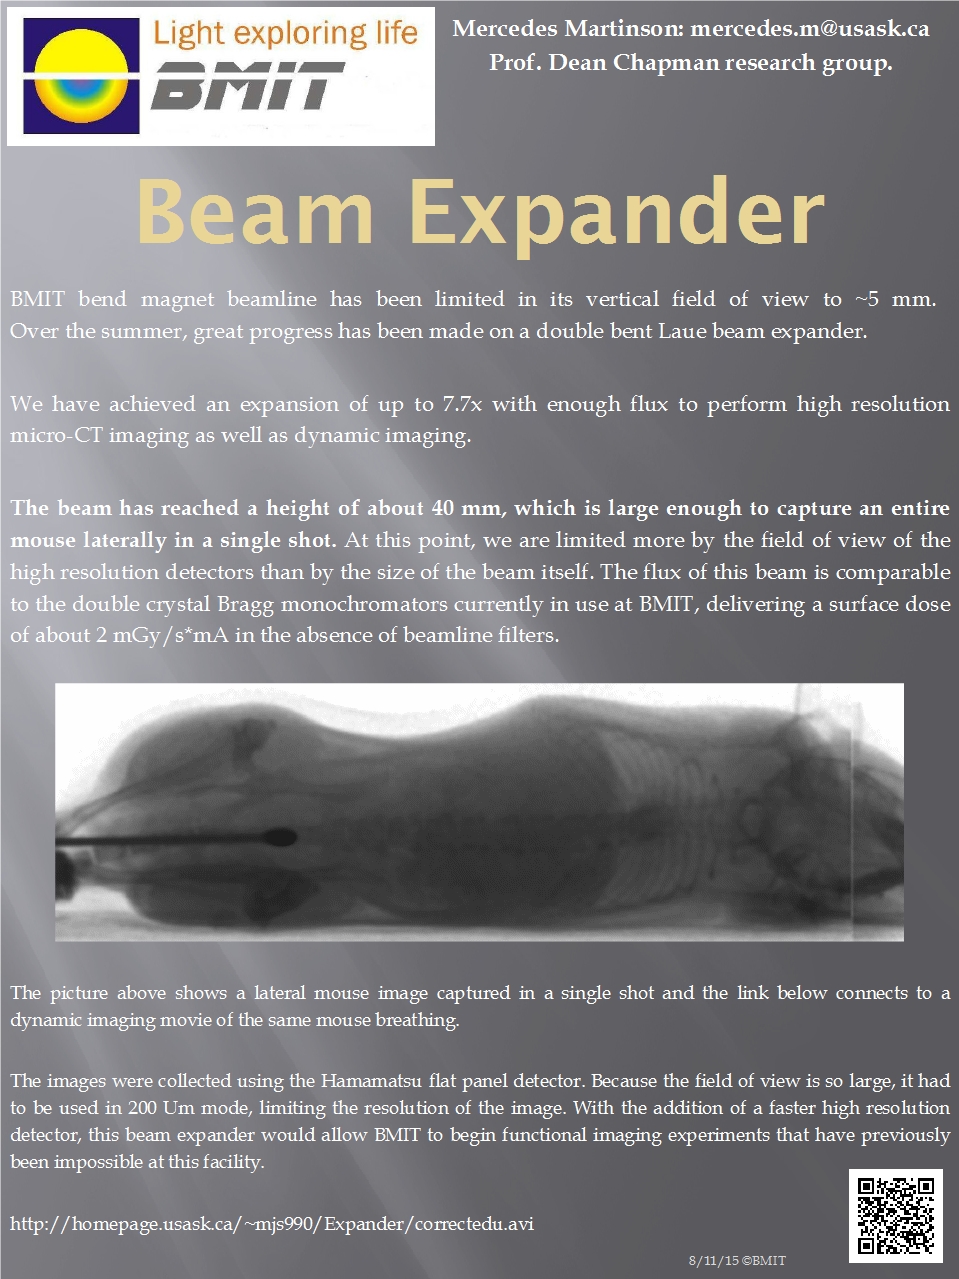 Beam Expander Image